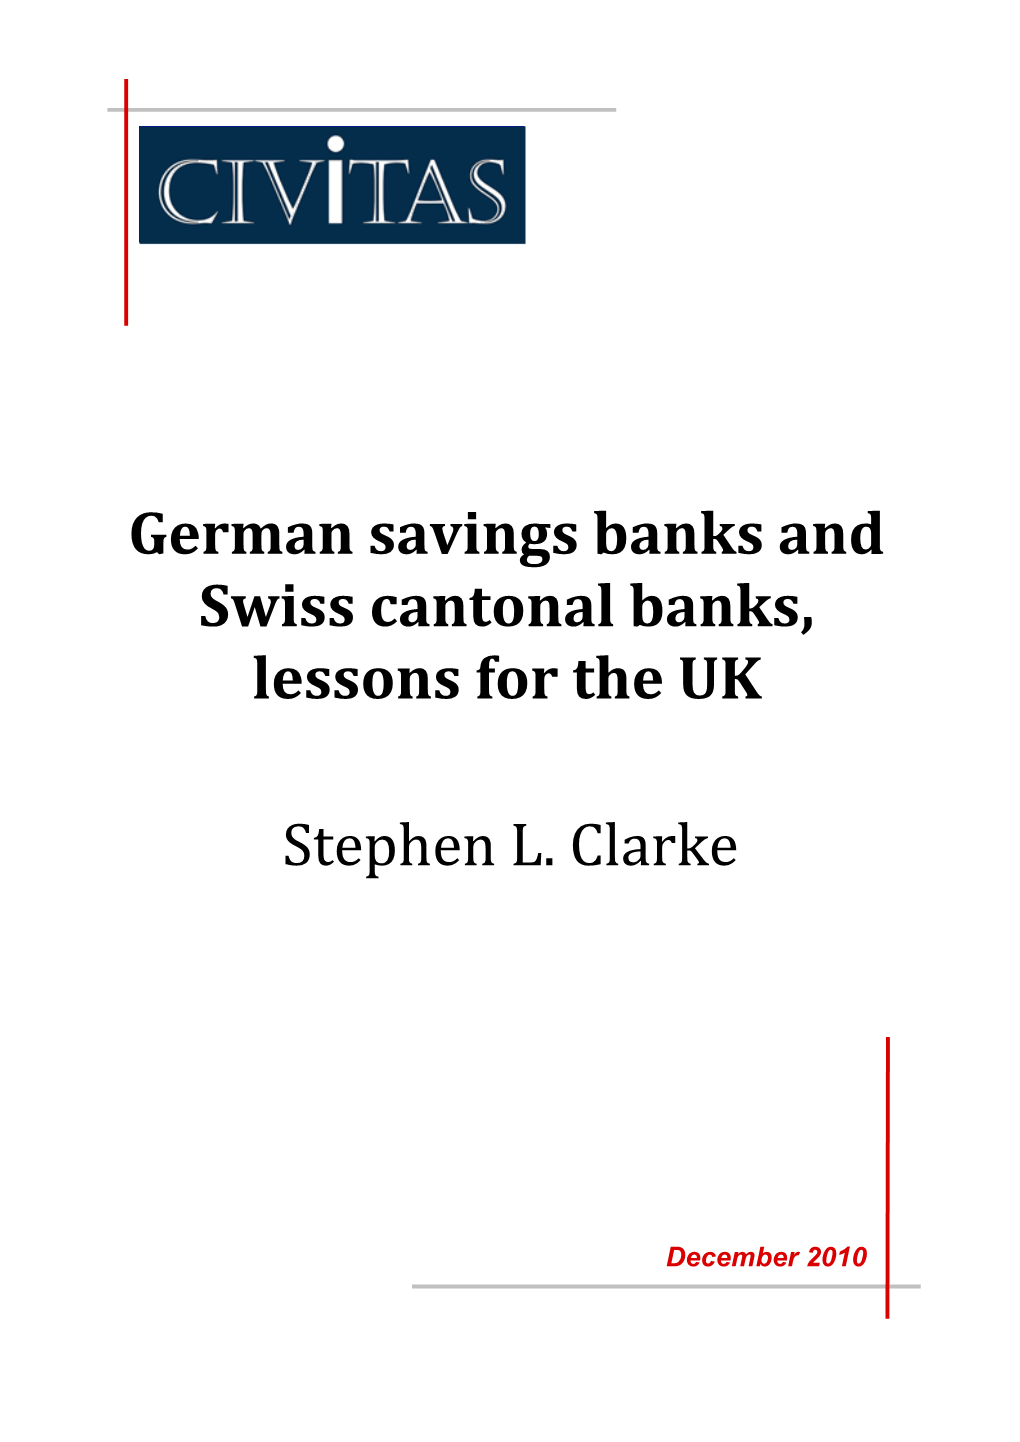 German Savings Banks and Swiss Cantonal Banks, Lessons for the UK